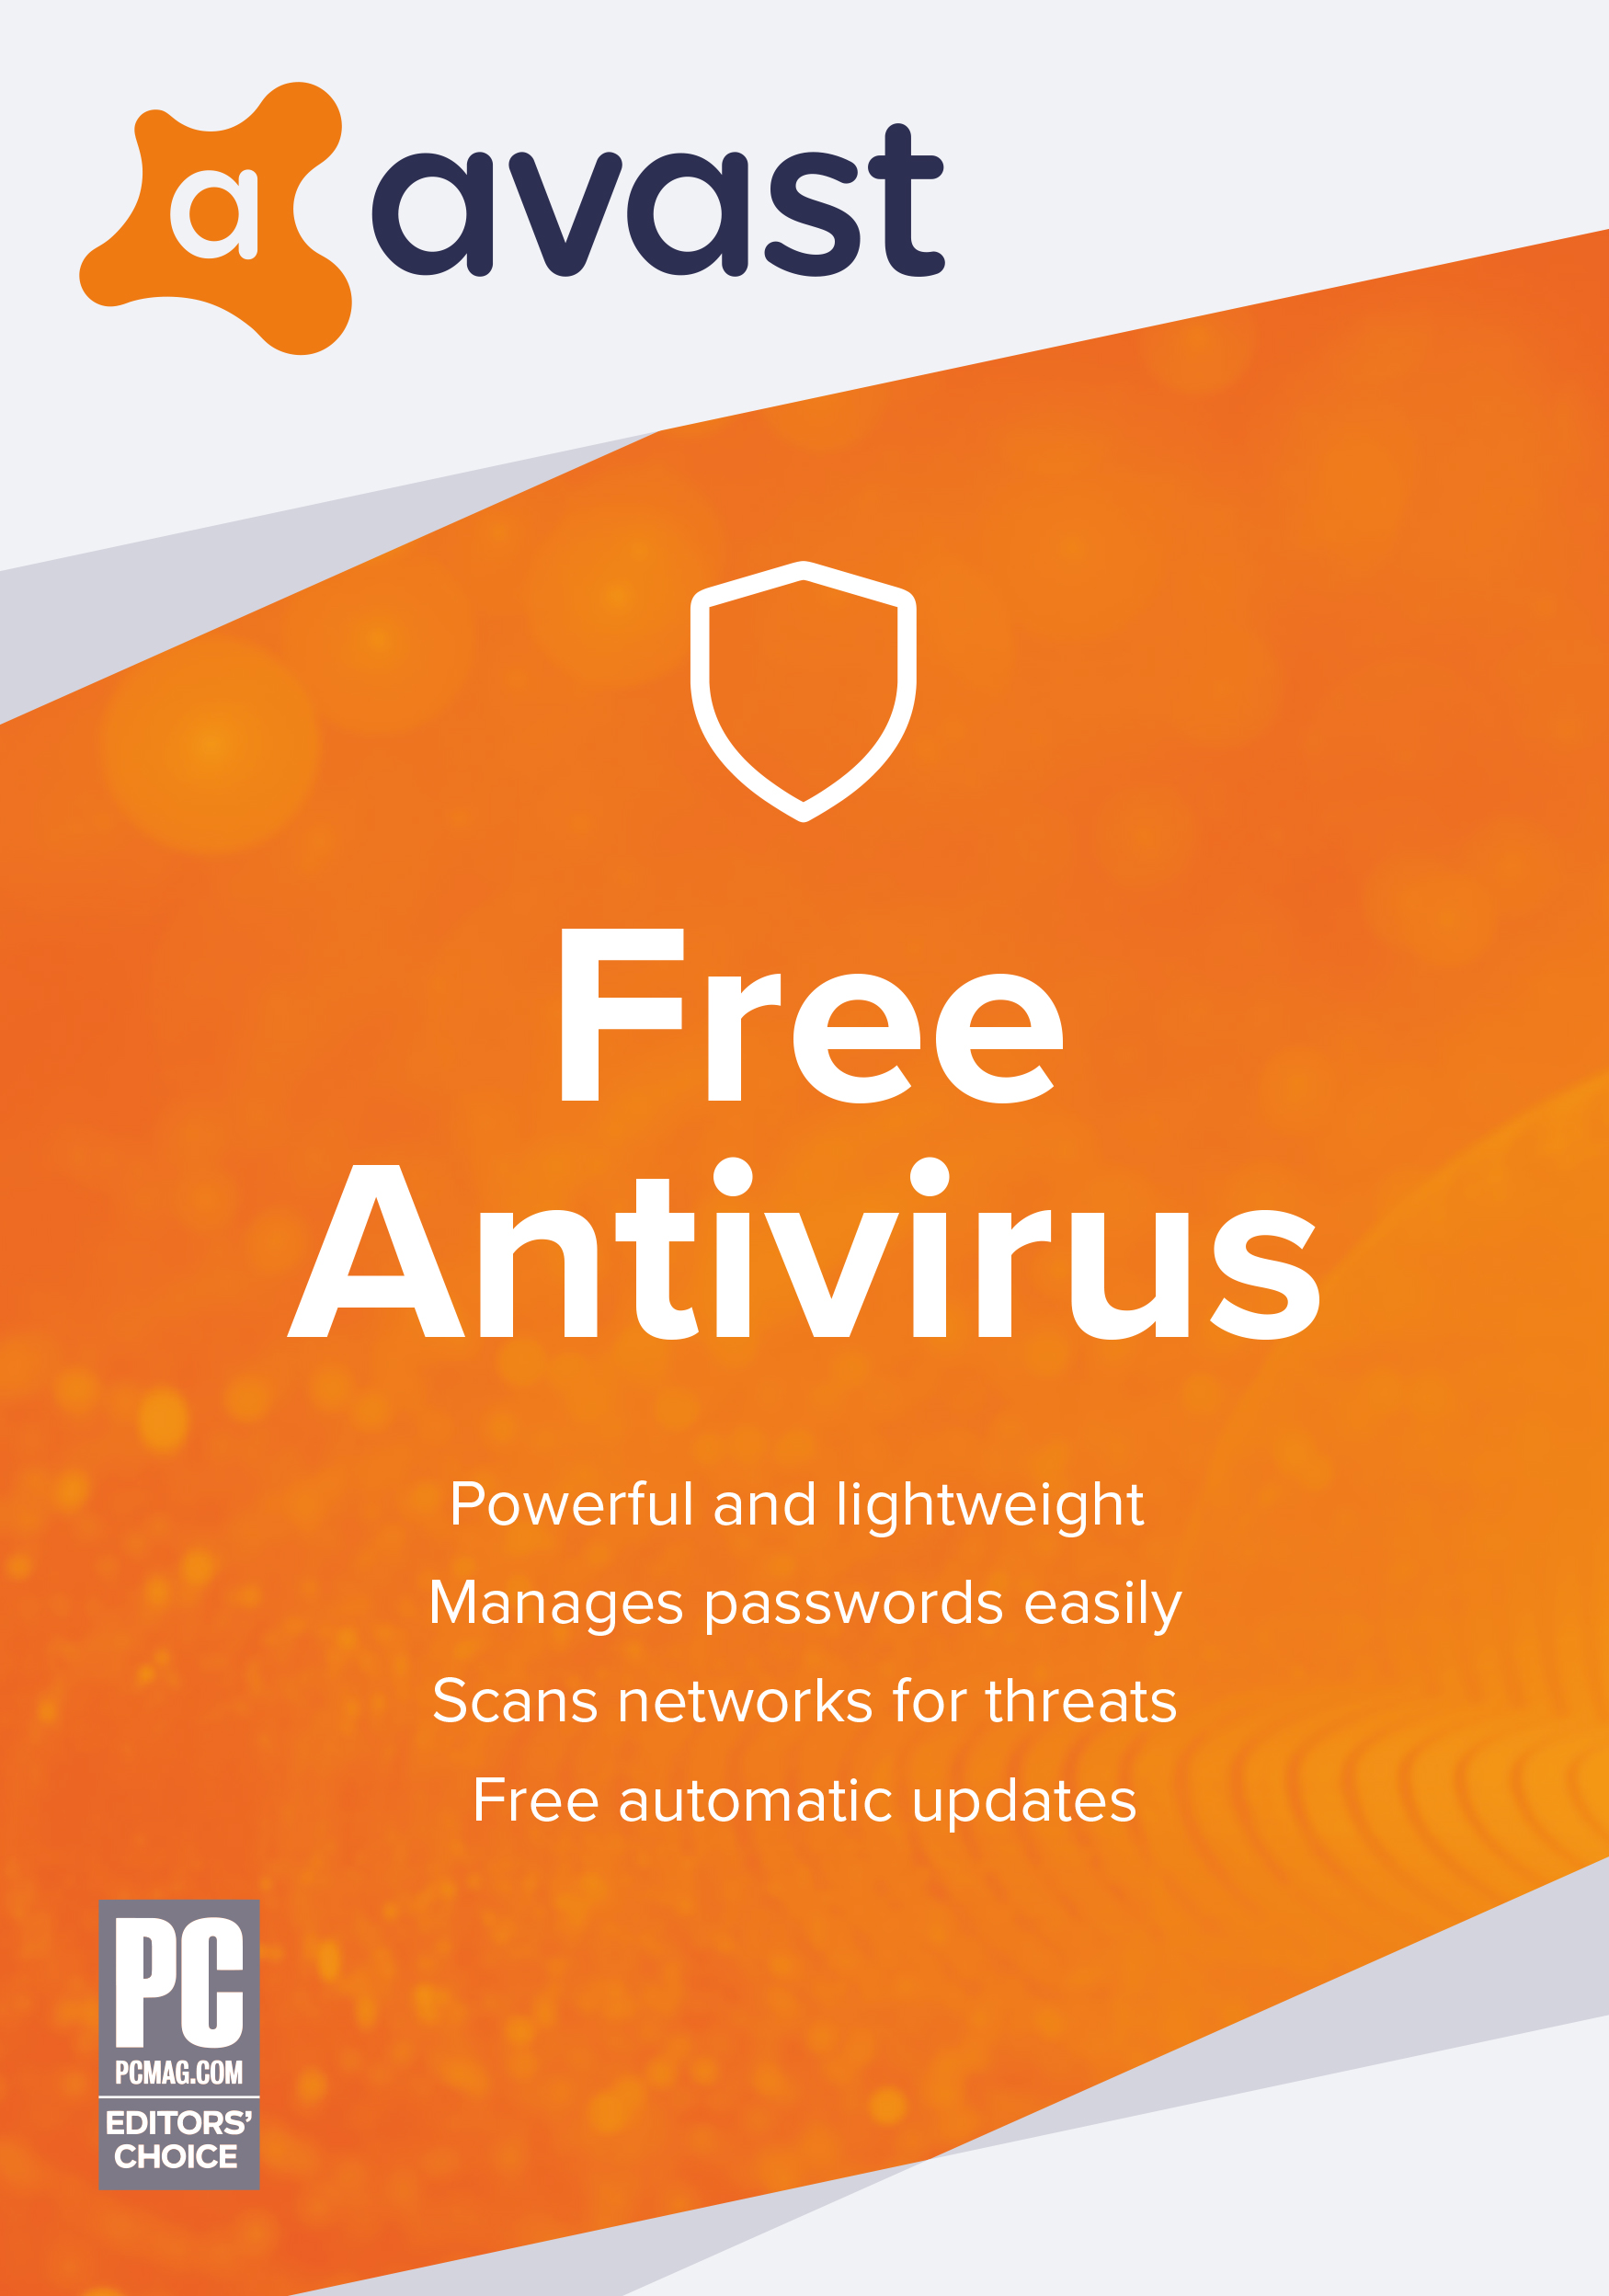 Vista fx 2 descargar antivirus download